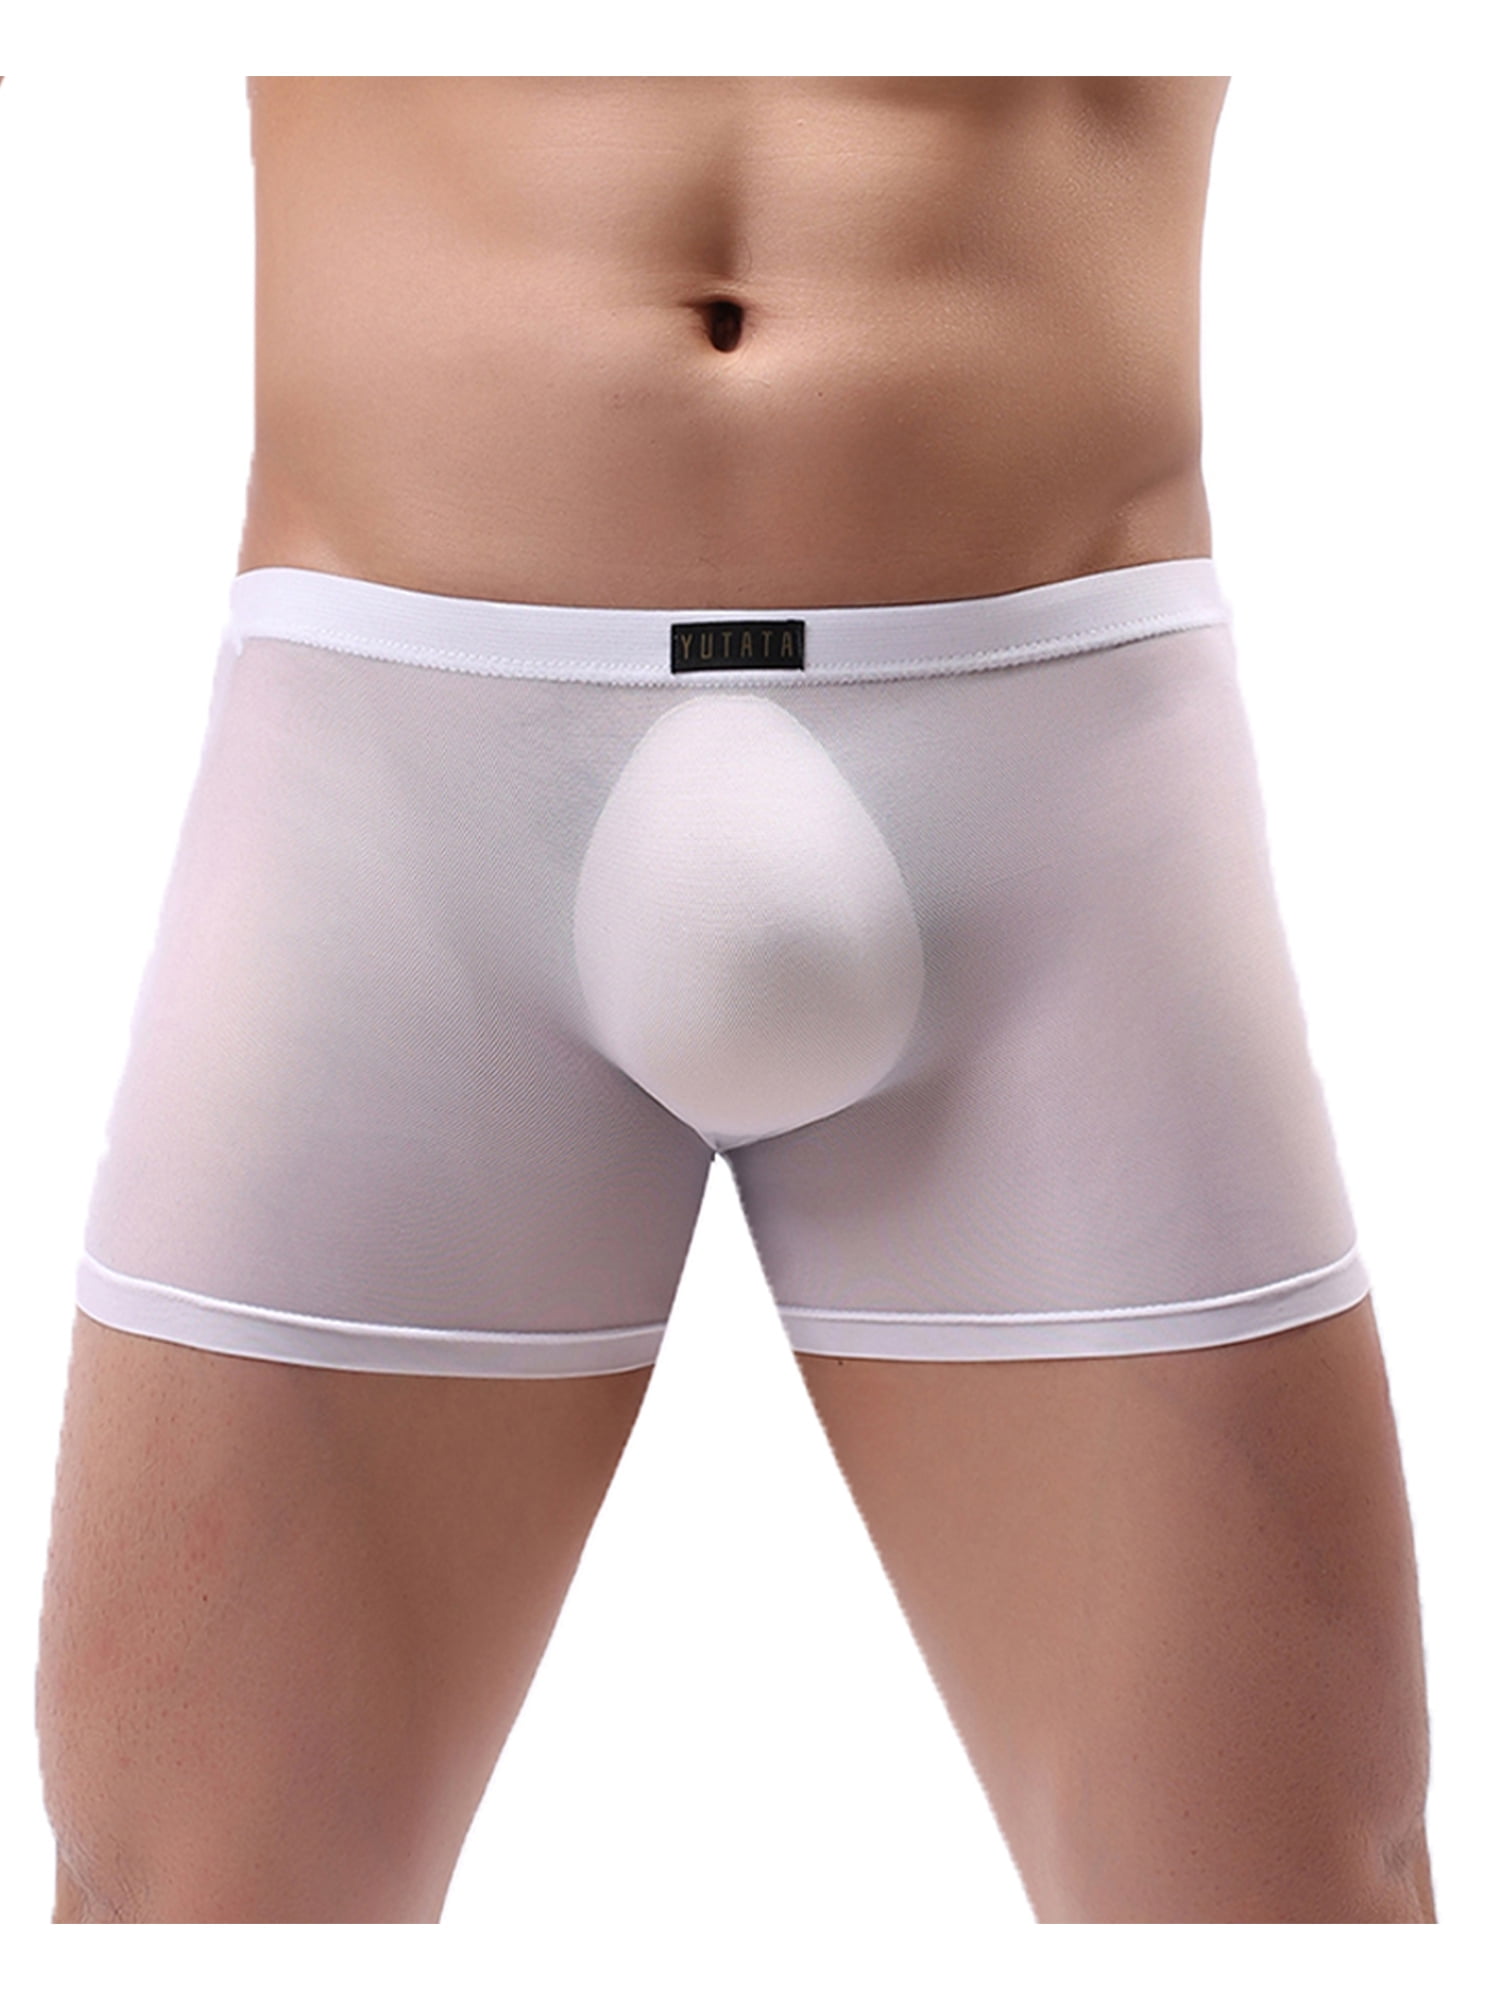 Men White Athletic Sports Stretch Striped Boxer Brief Sheer Pouch Underwear S-XL 